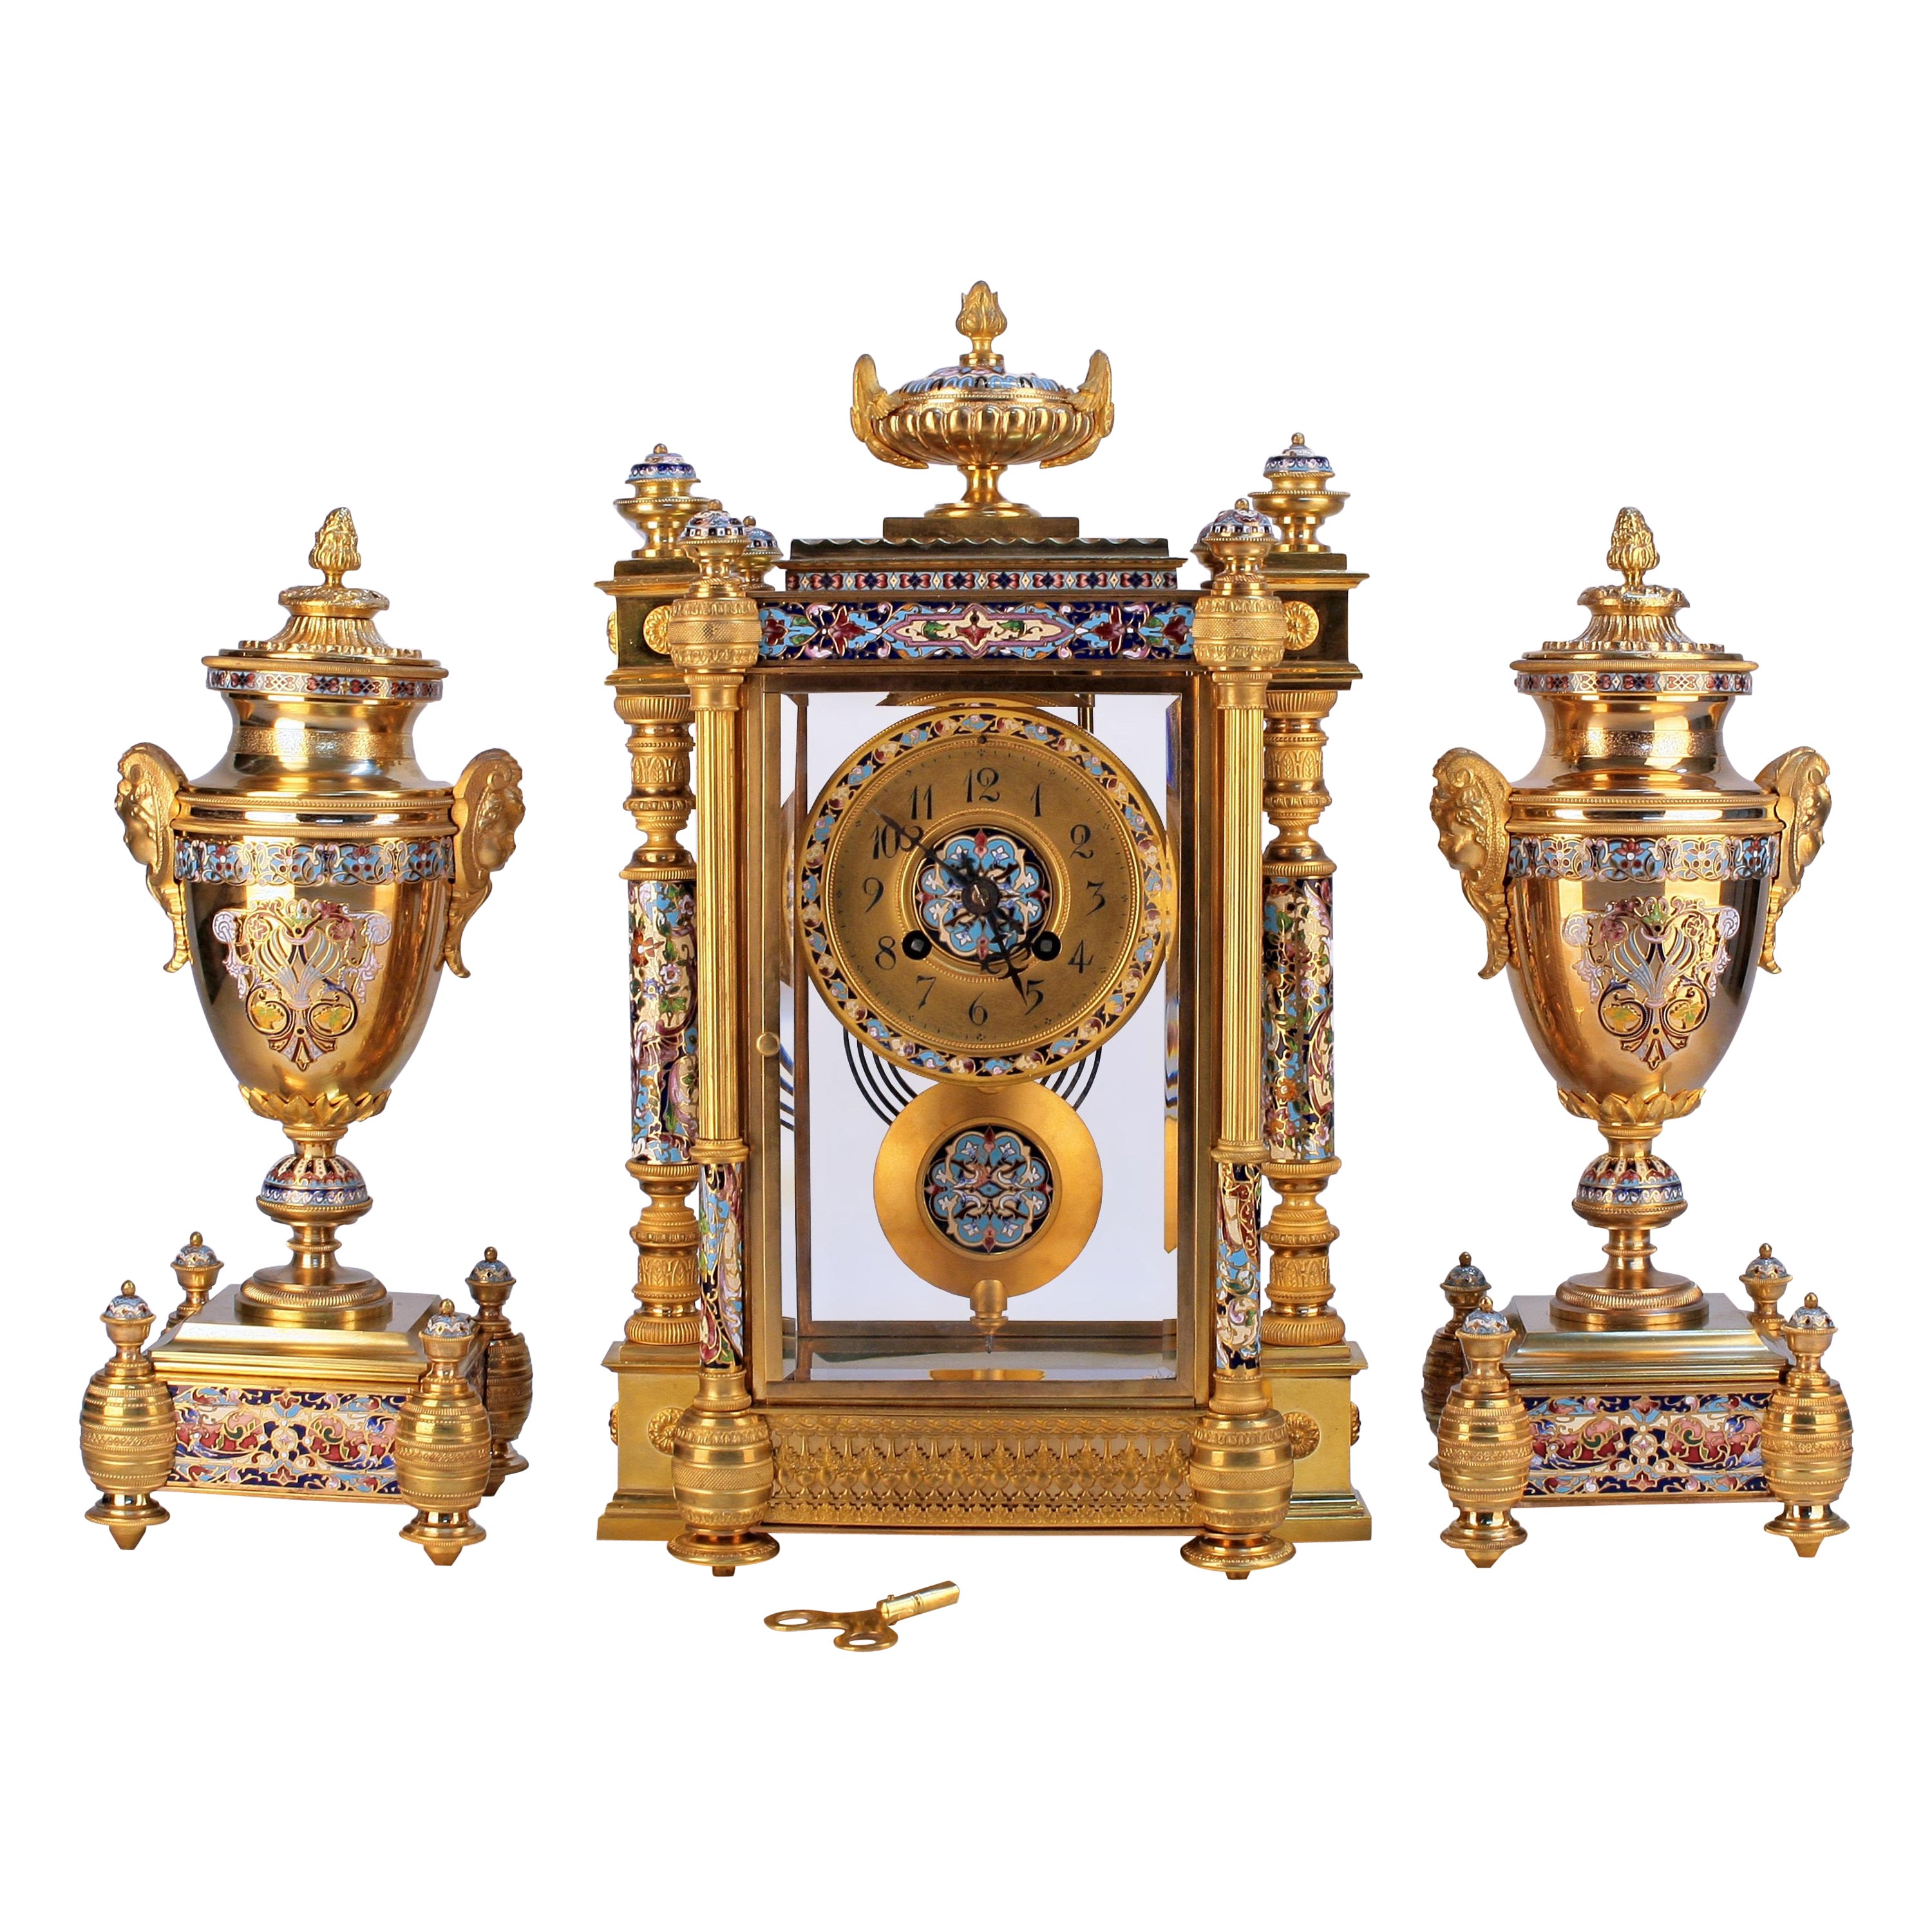 Cloissoné Clocks